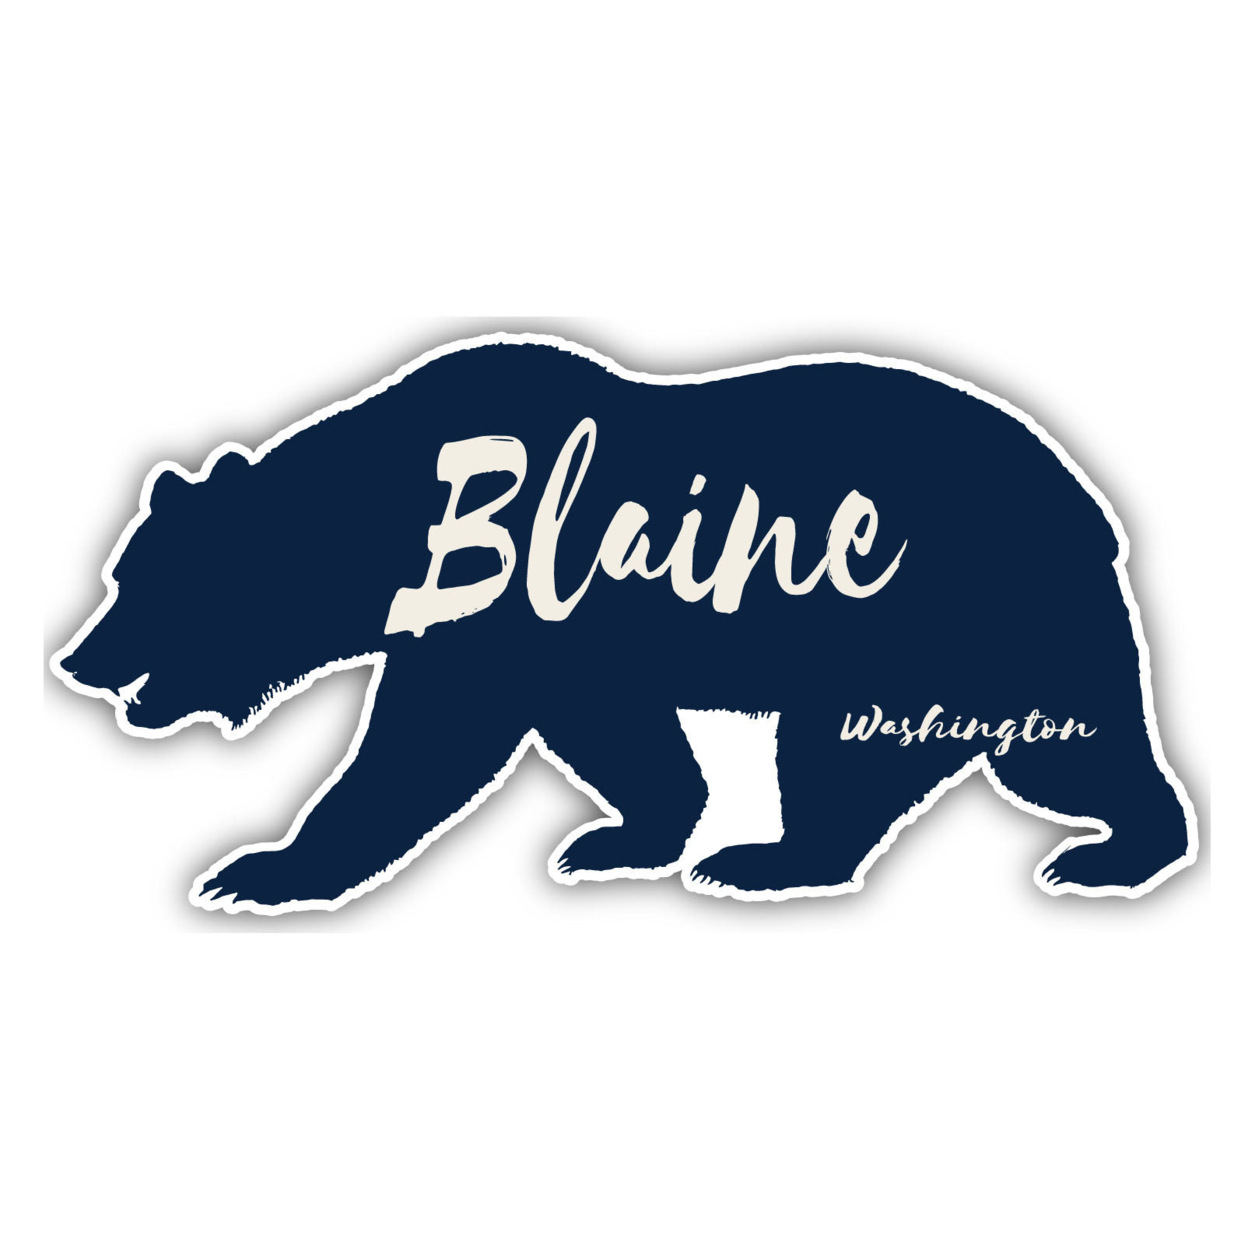 Blaine Washington Souvenir Decorative Stickers (Choose Theme And Size) - 4-Pack, 8-Inch, Bear